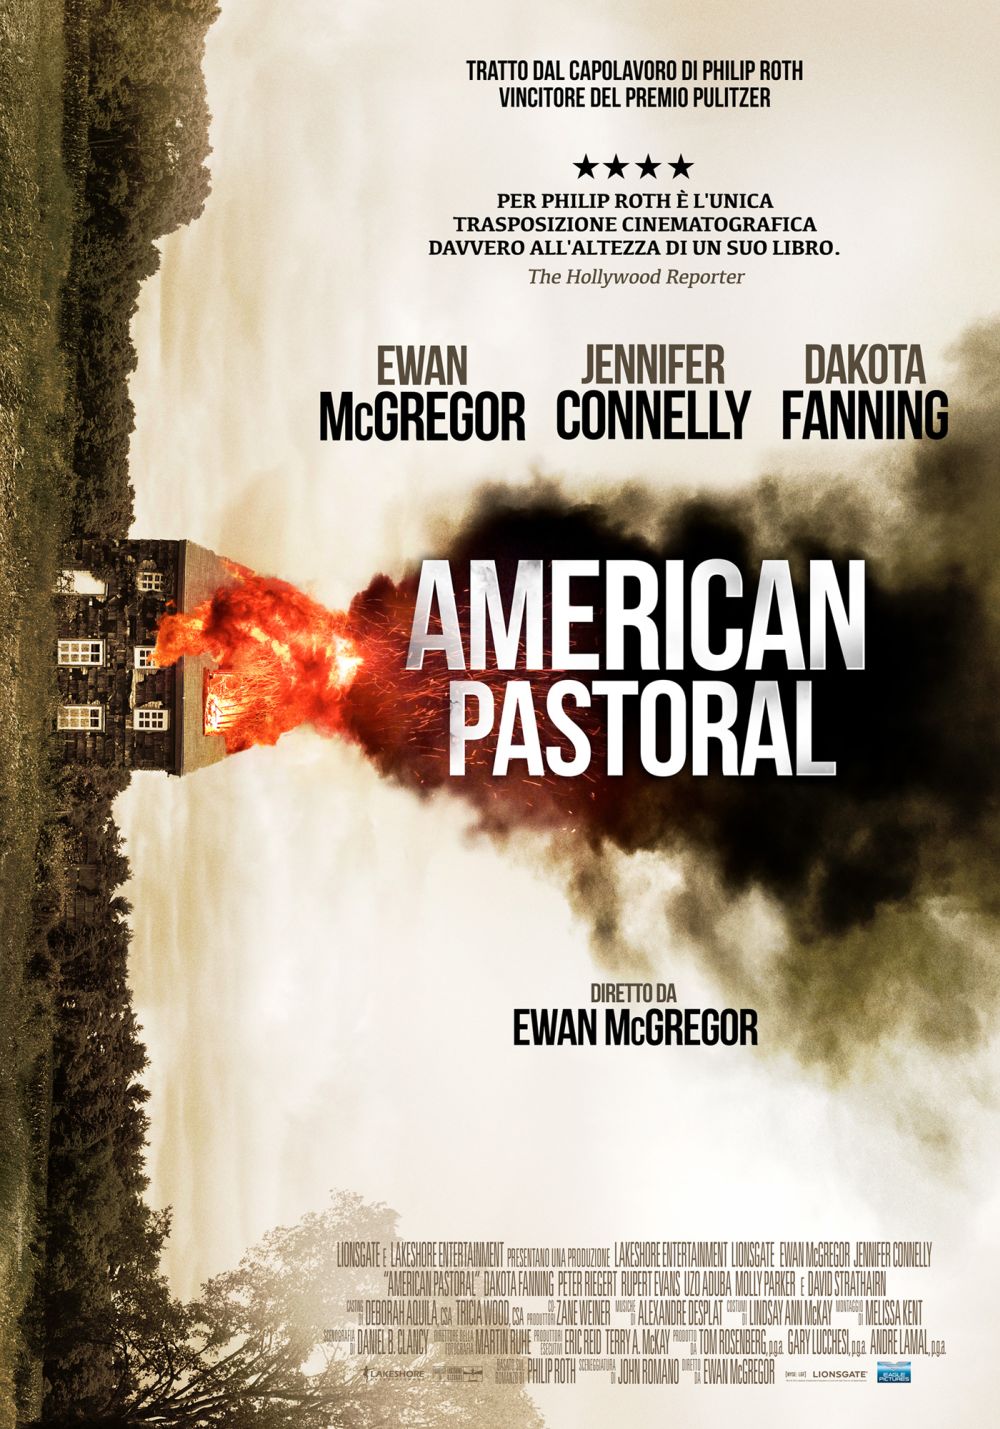 https://movieplayer.it/film/american-pastoral_24214/